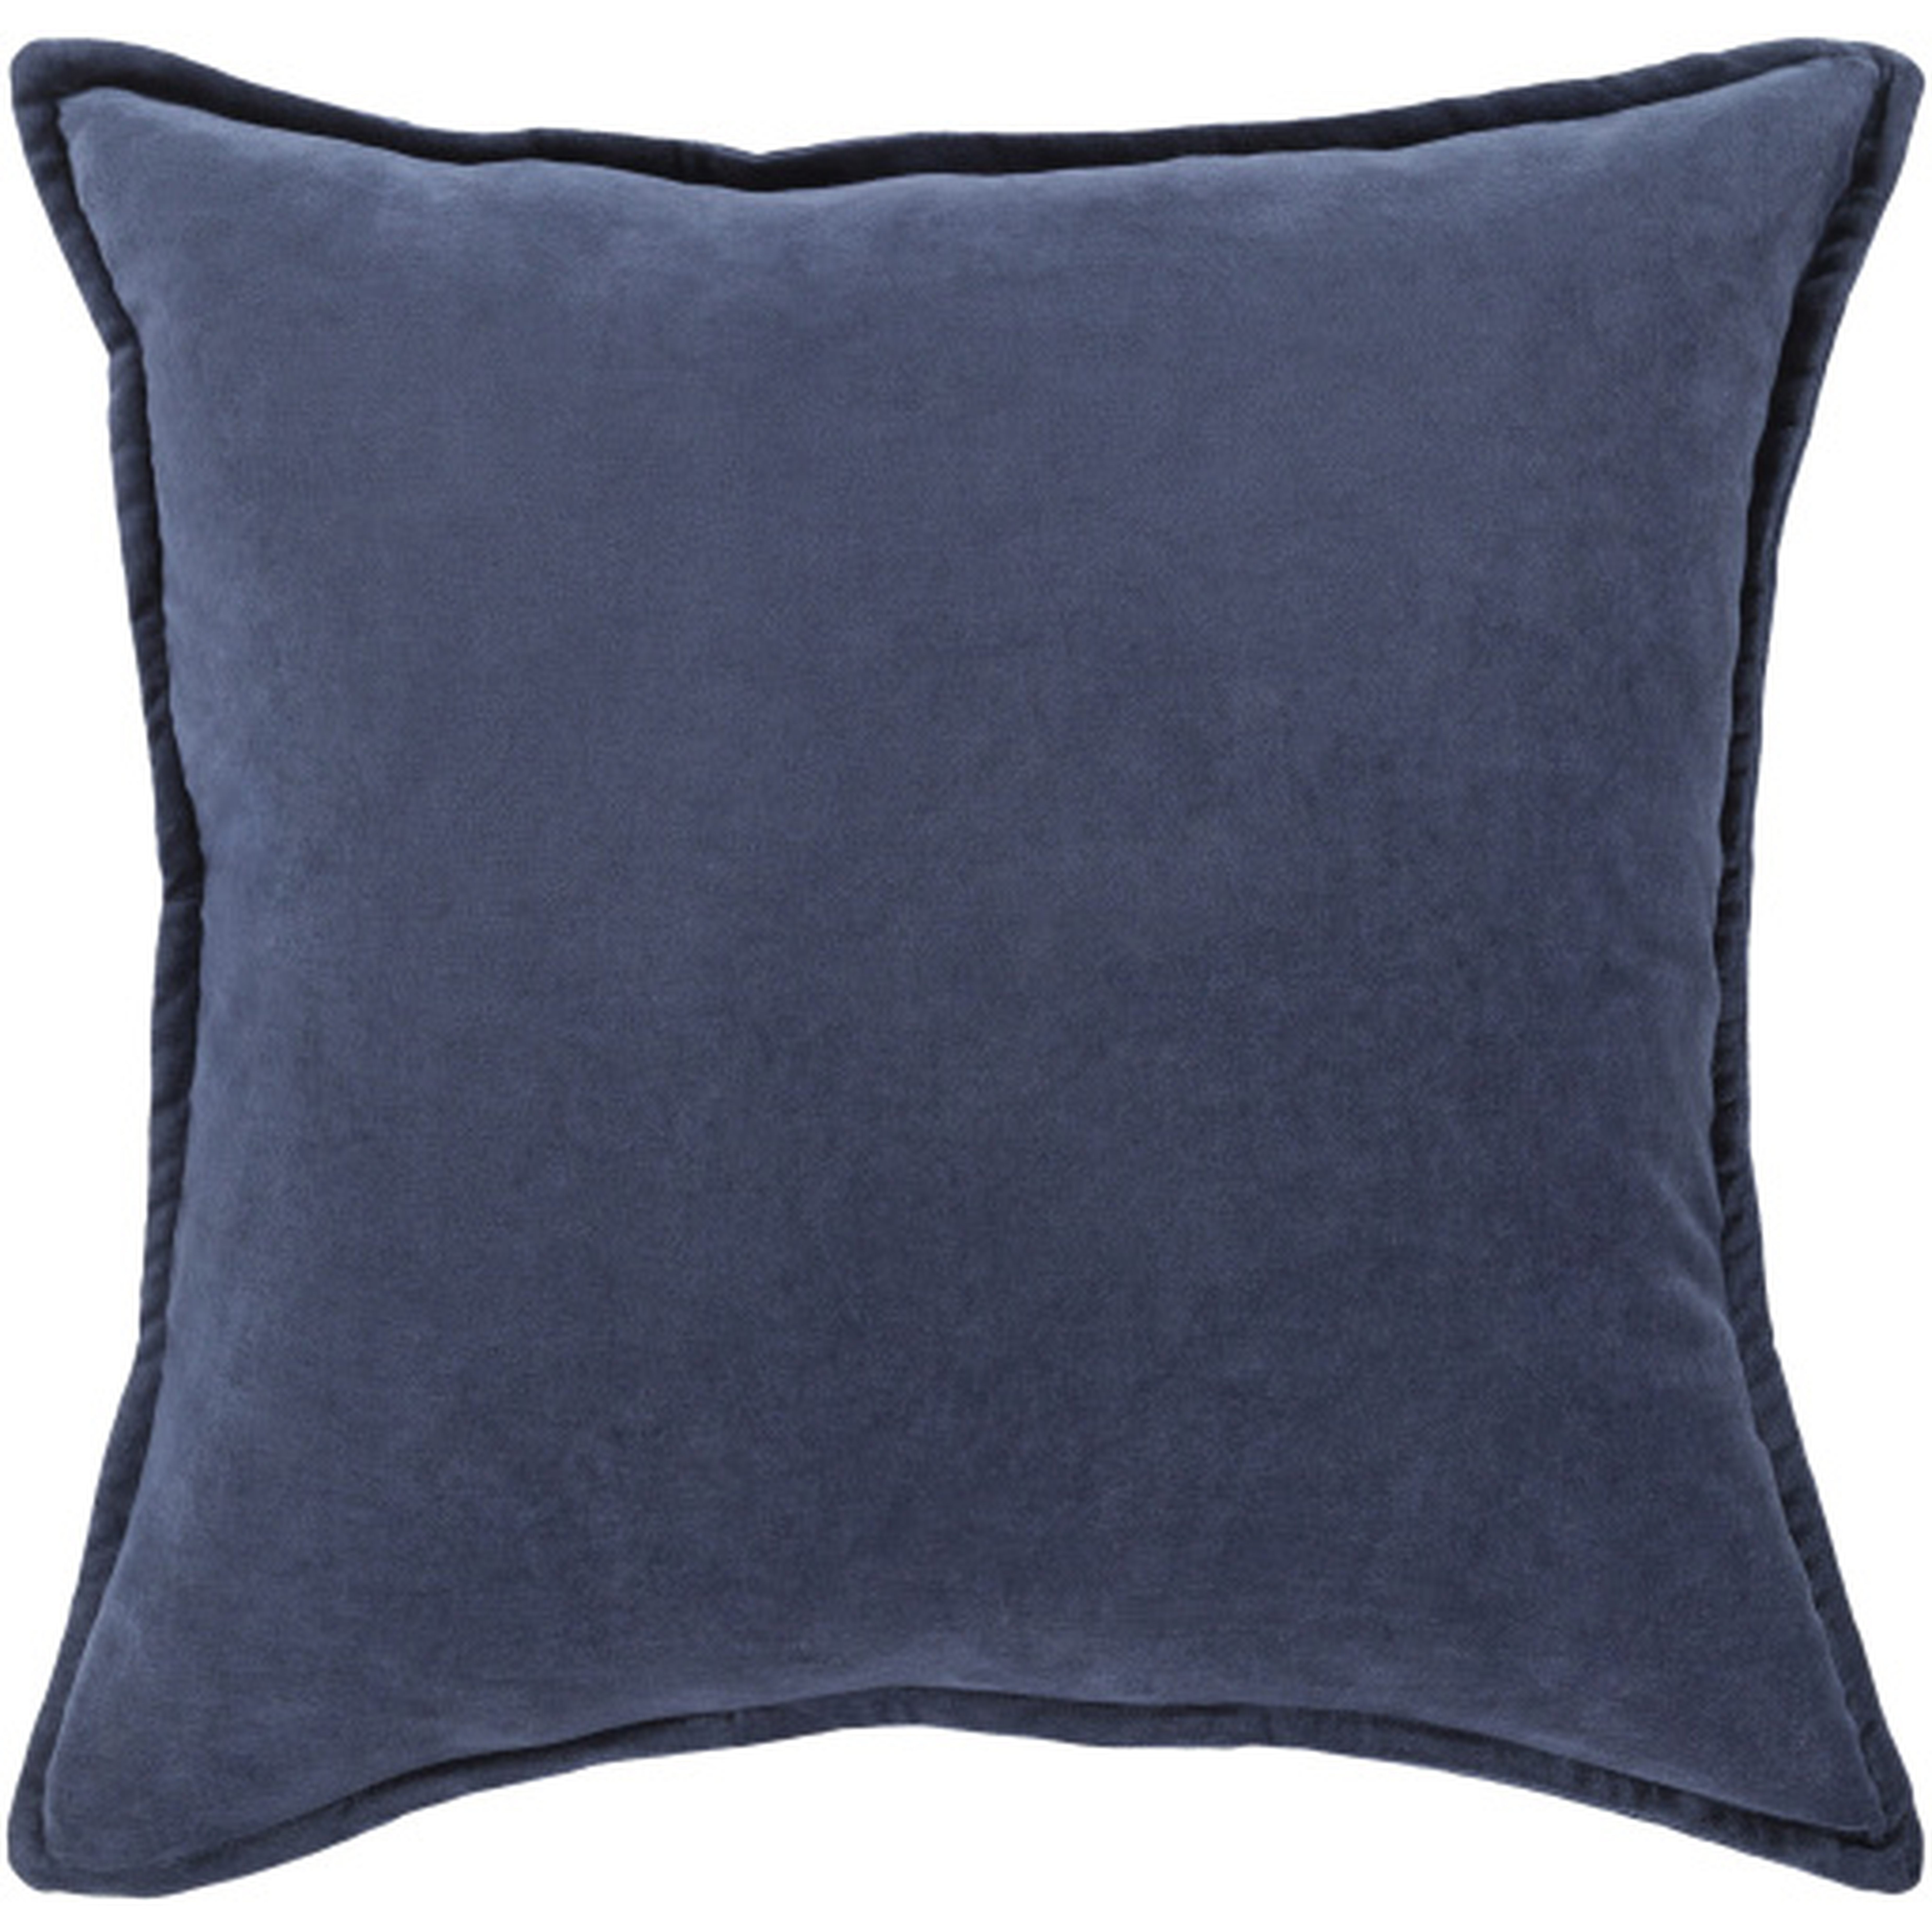 Cotton Velvet Throw Pillow, Navy, 18" x 18" - Surya